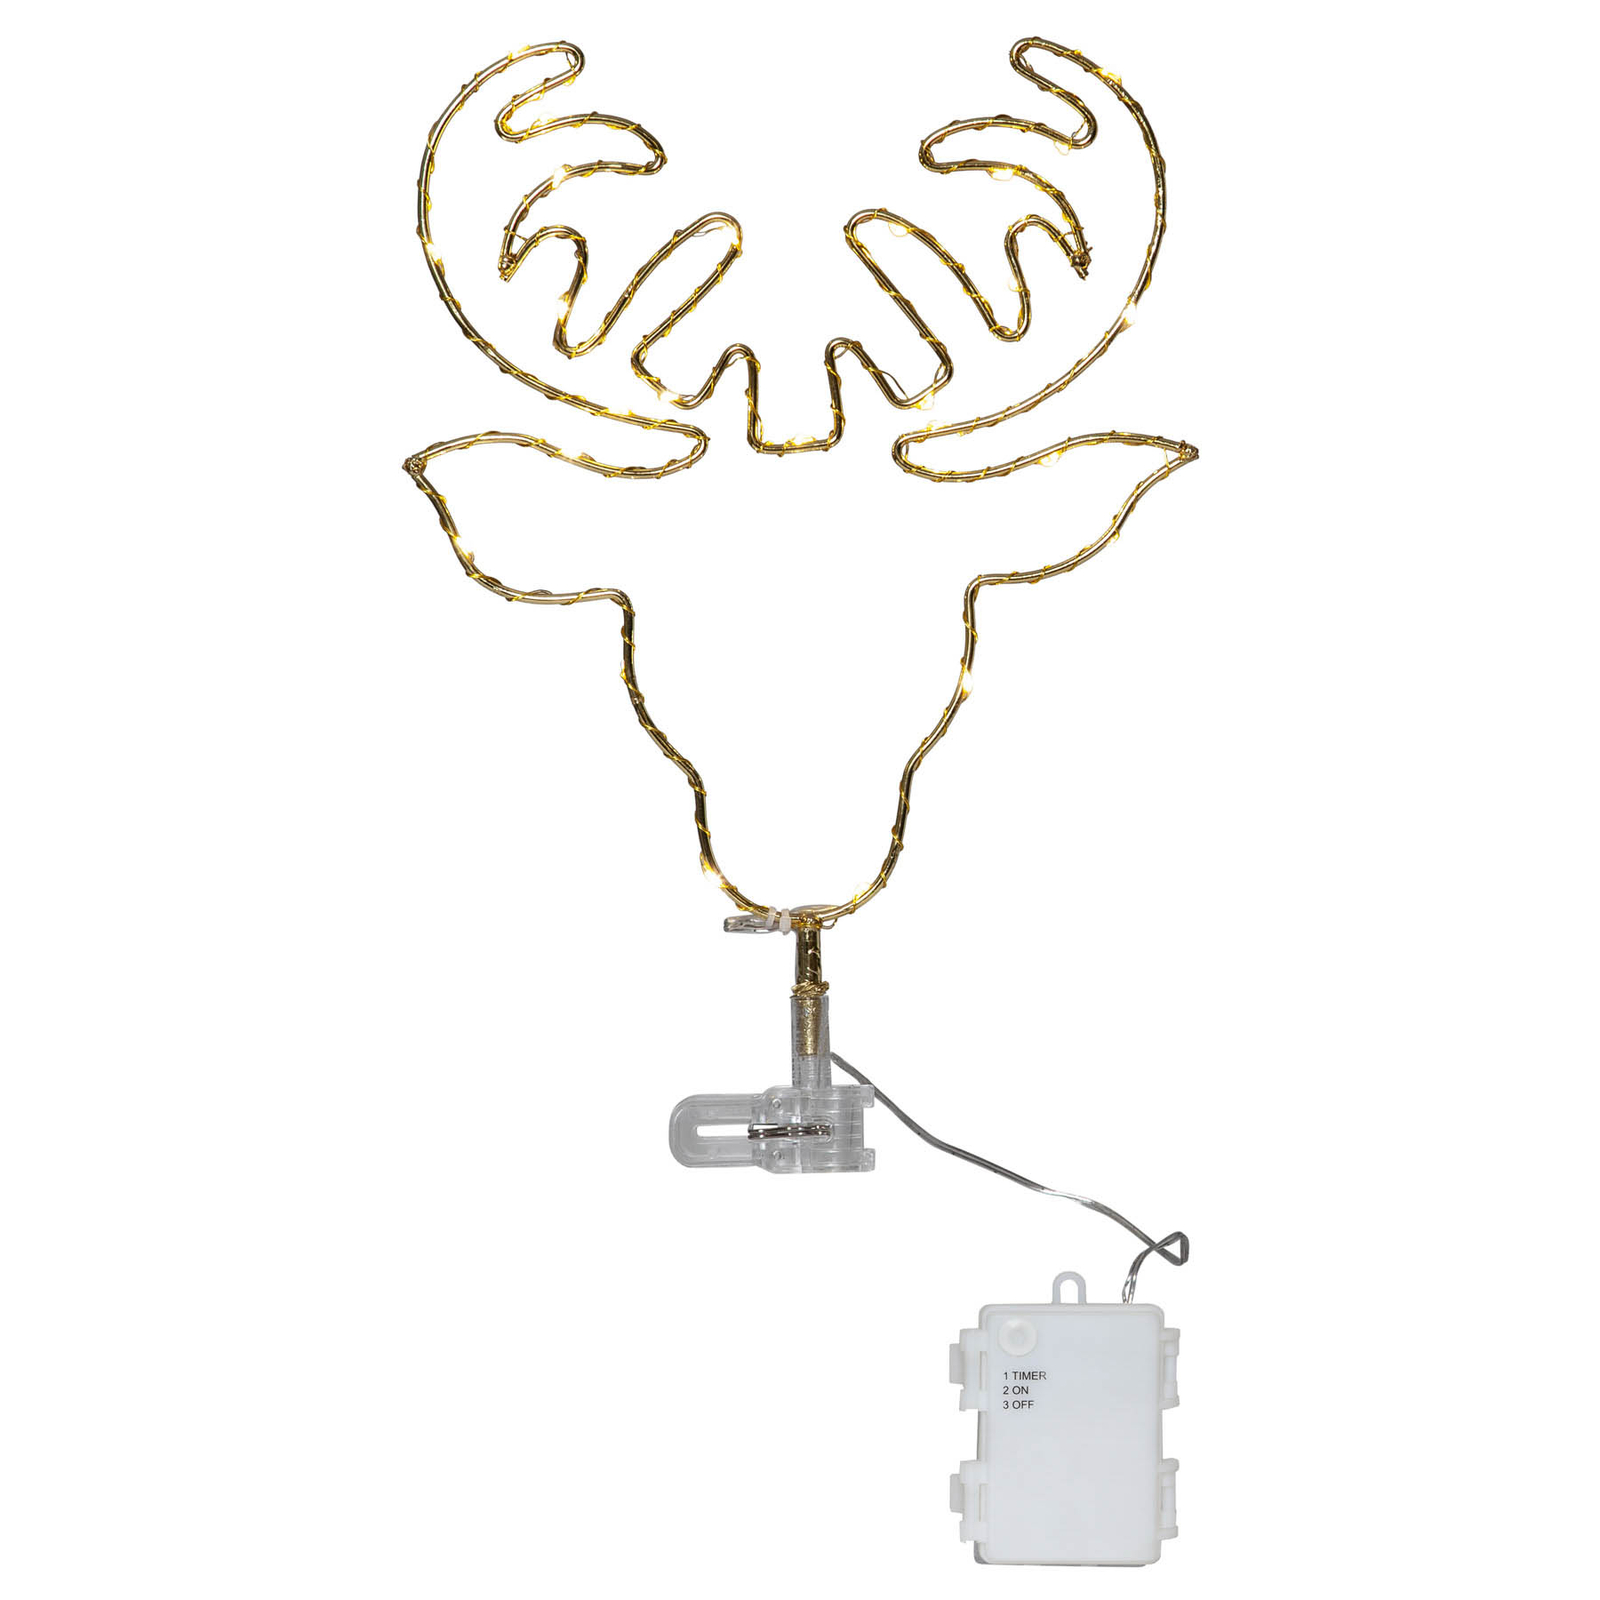 Topsy LED tree topper, deer head battery